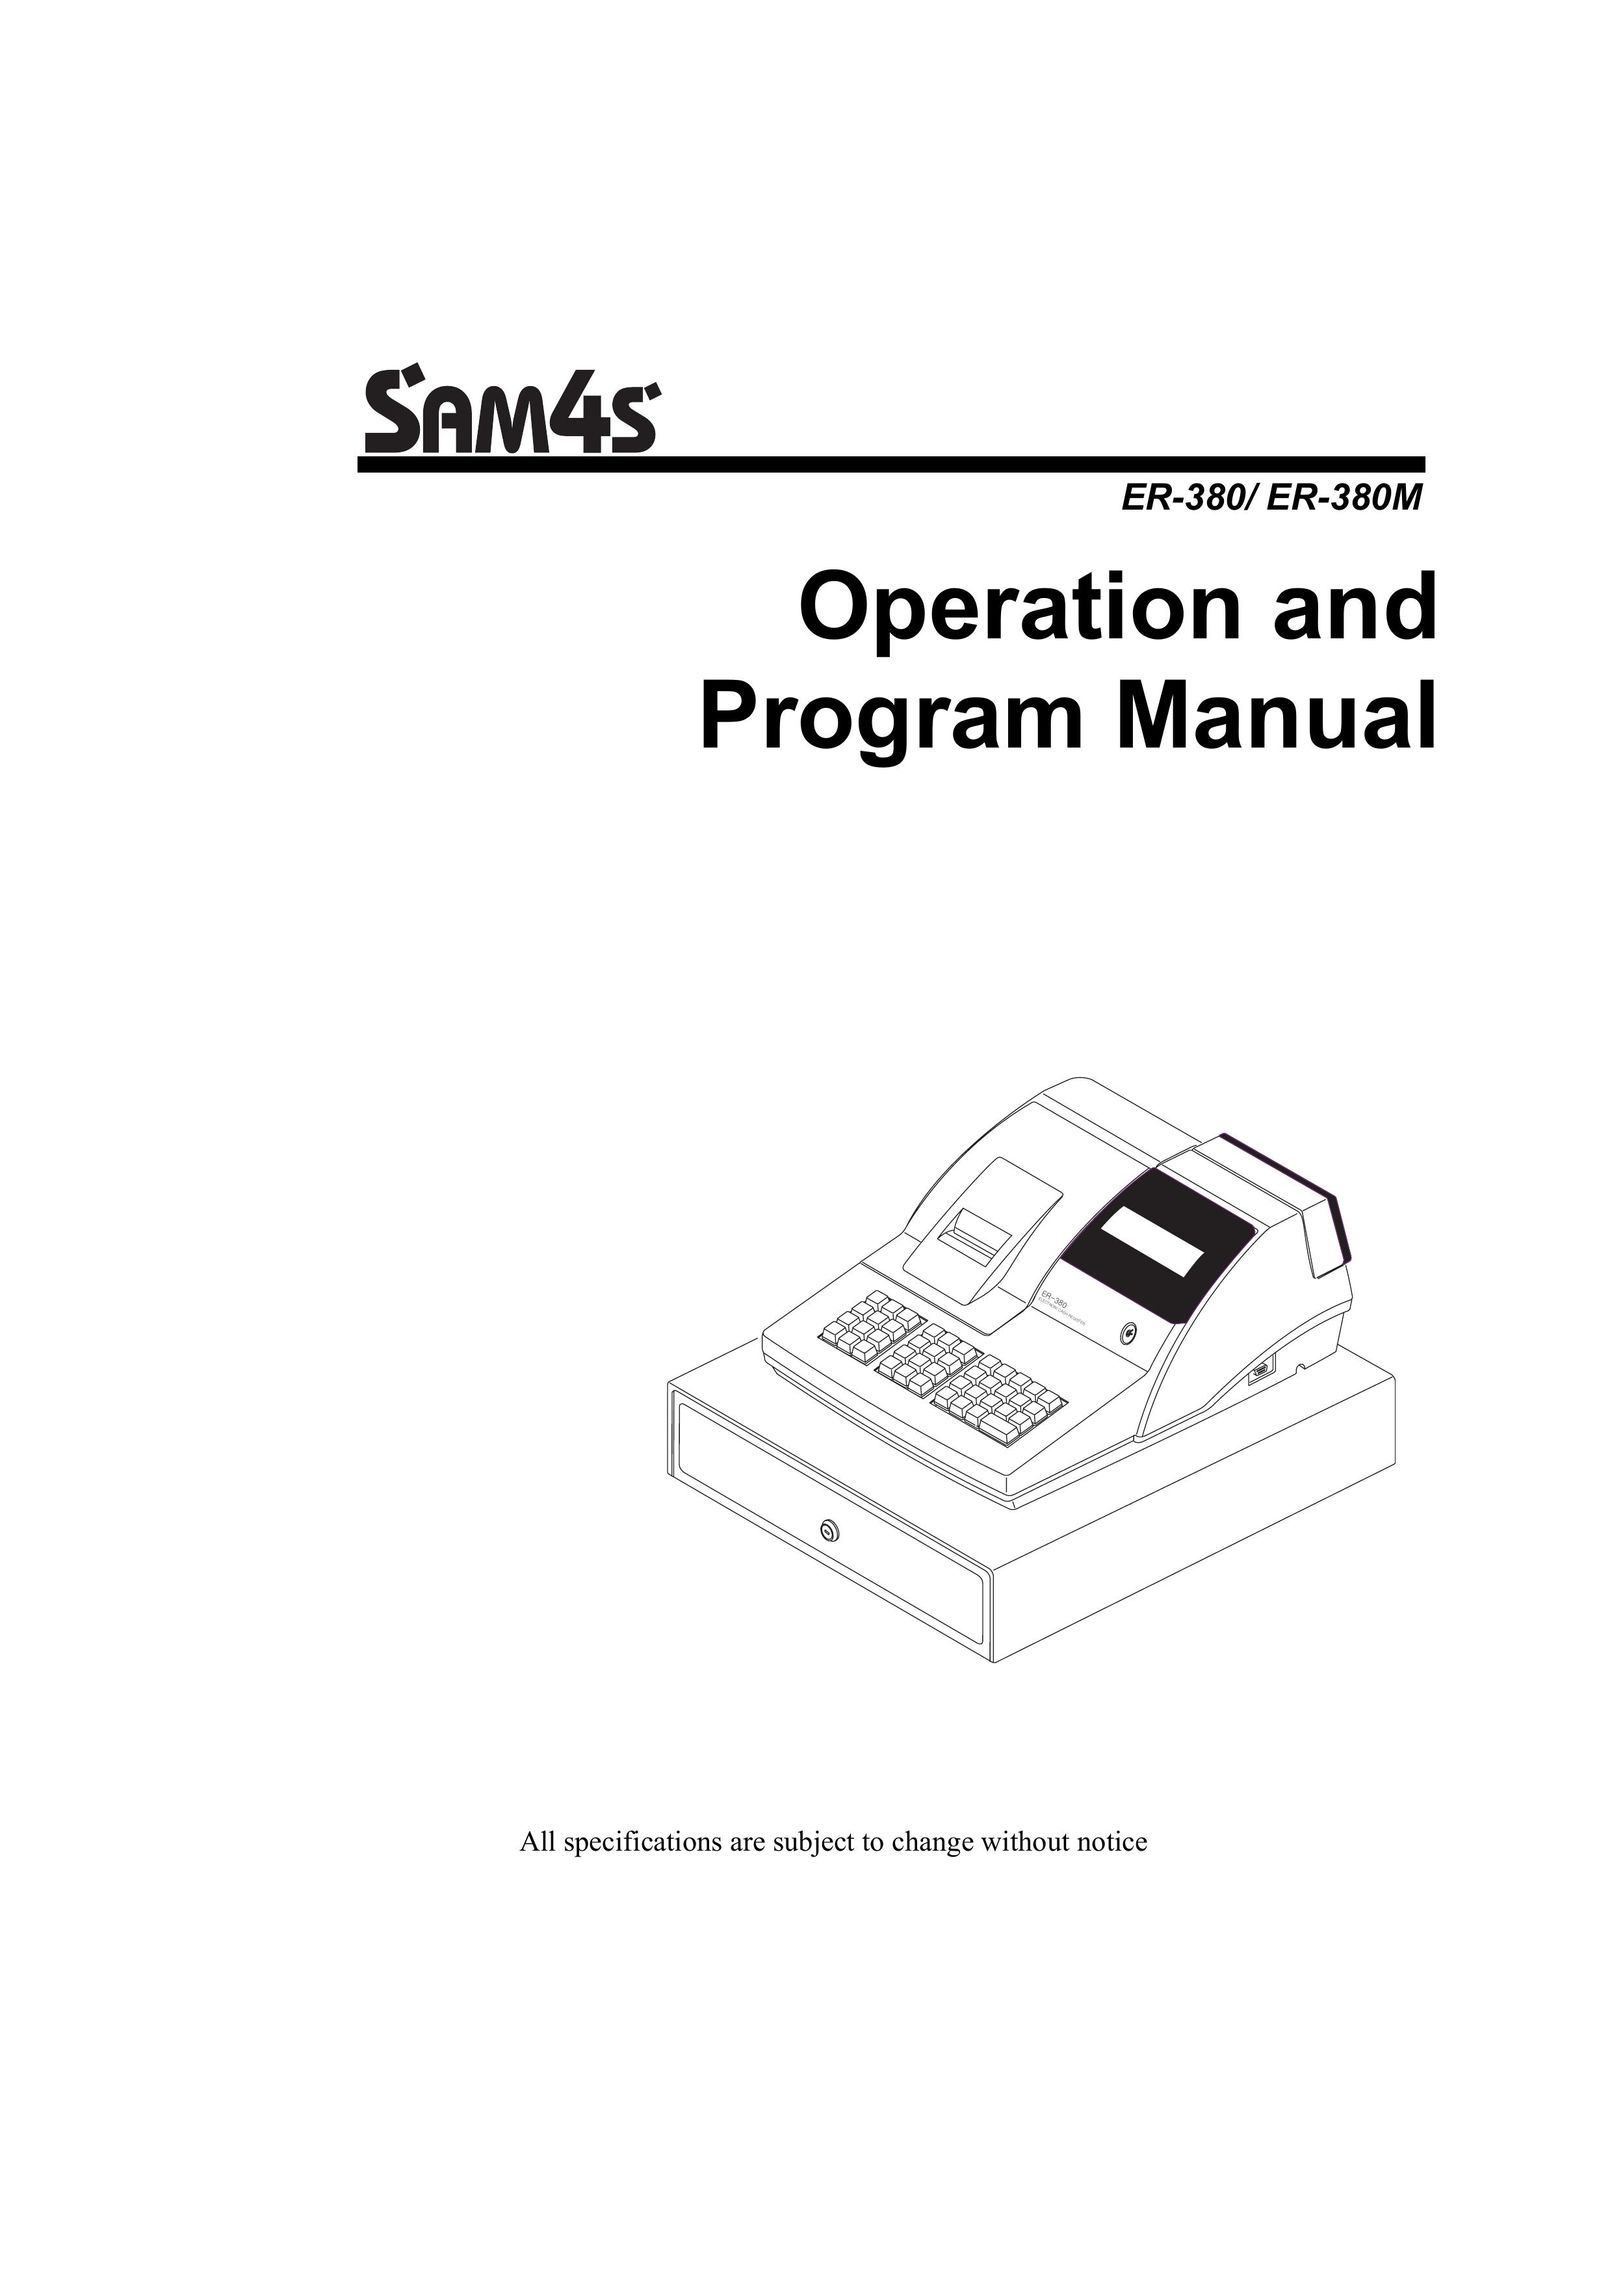 Sam4s ER-380M Cash Register User Manual